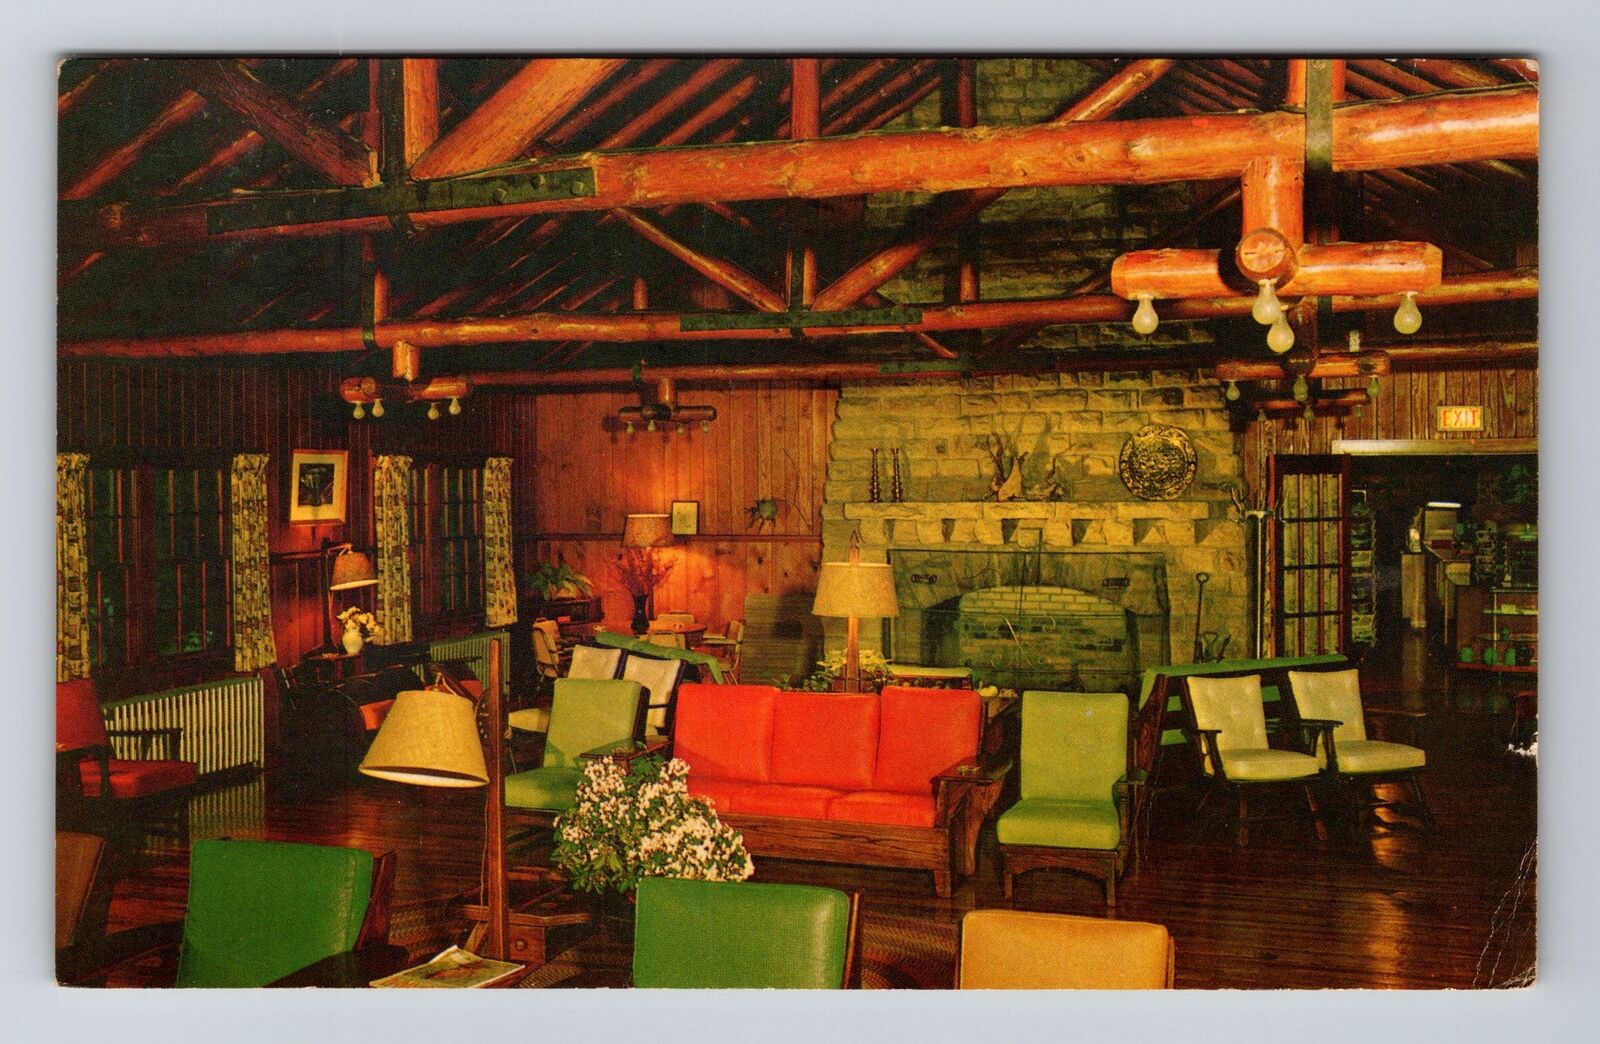 Corbin KY-Kentucky Interior View Lounge at DuPont Lodge c1965 Vintage Postcard